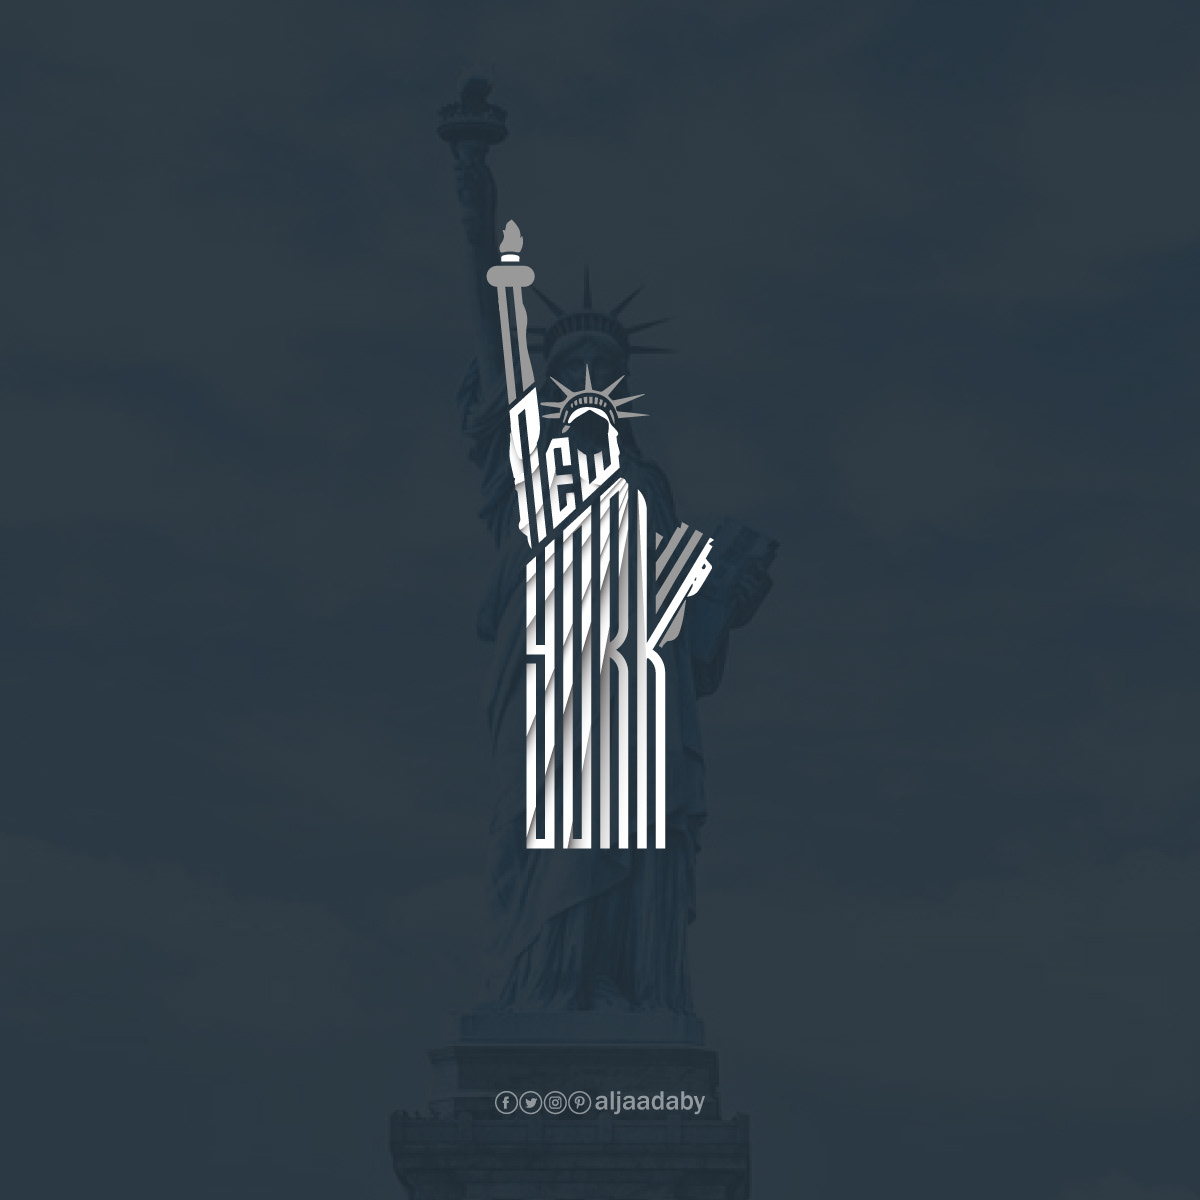 Typographic city logos based on their famous landmarks - New York